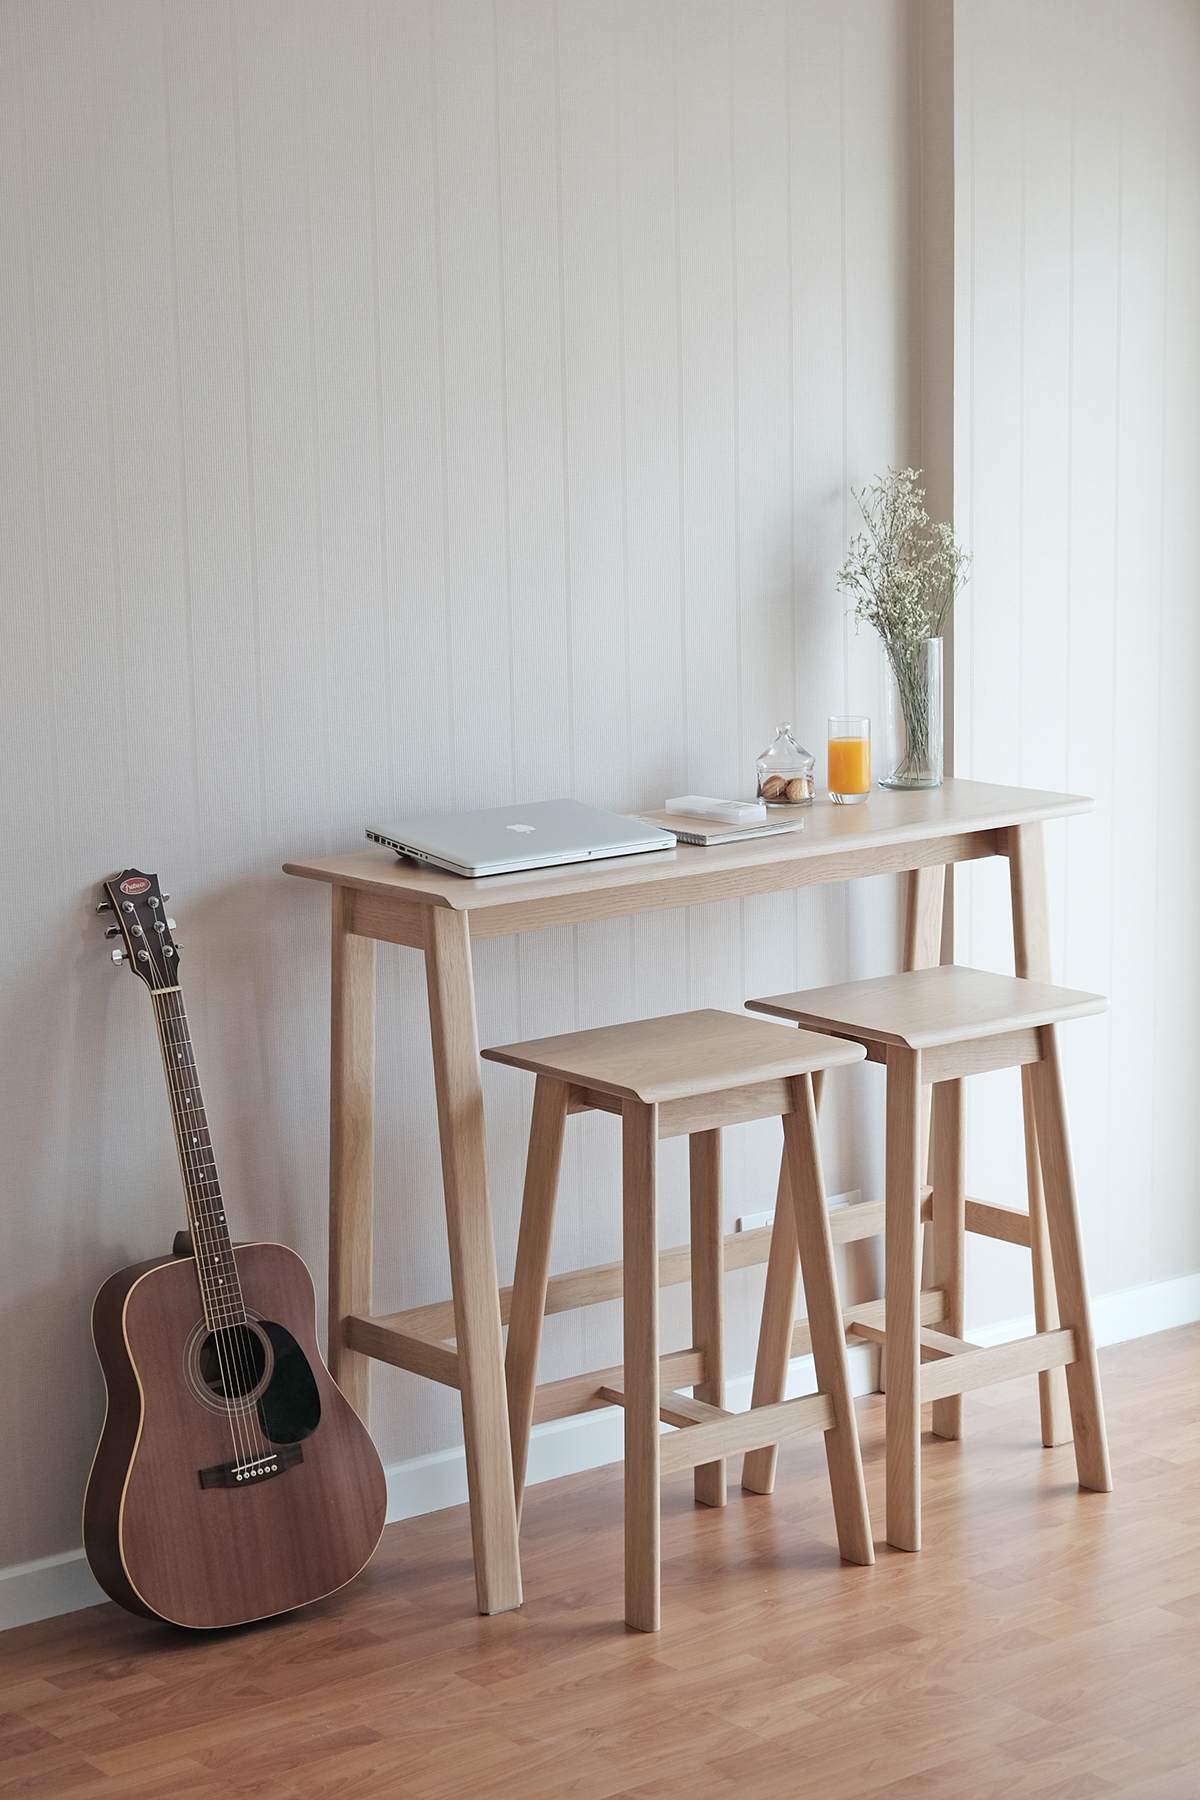 edge bar high table working living wood minimal simple creative